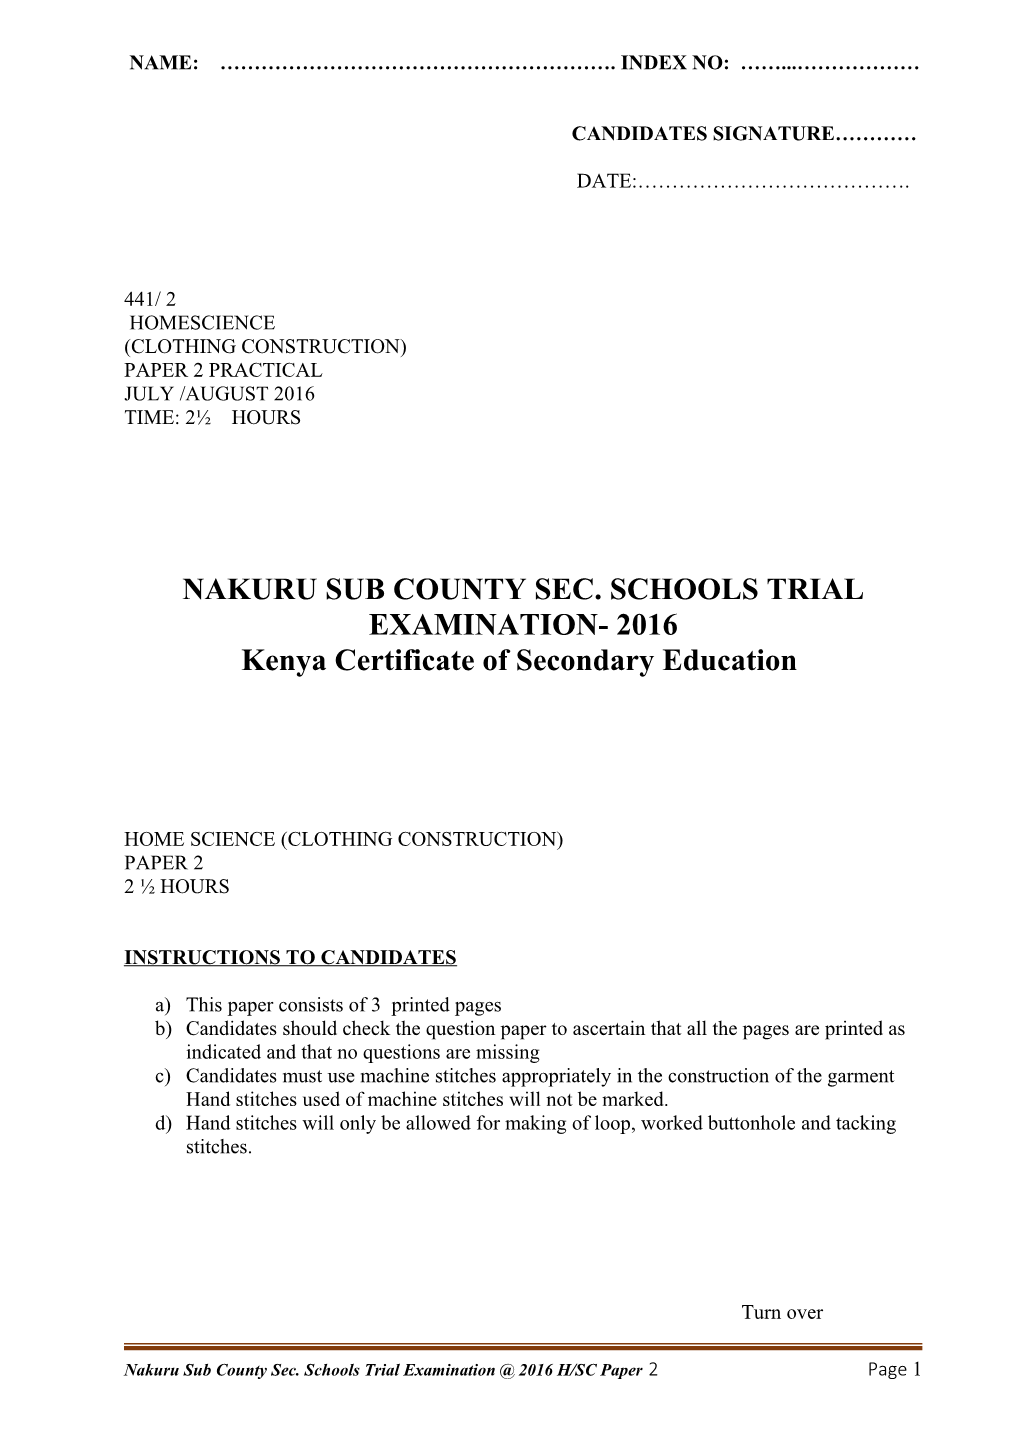 Nakuru Sub County Sec. Schools Trial Examination- 2016